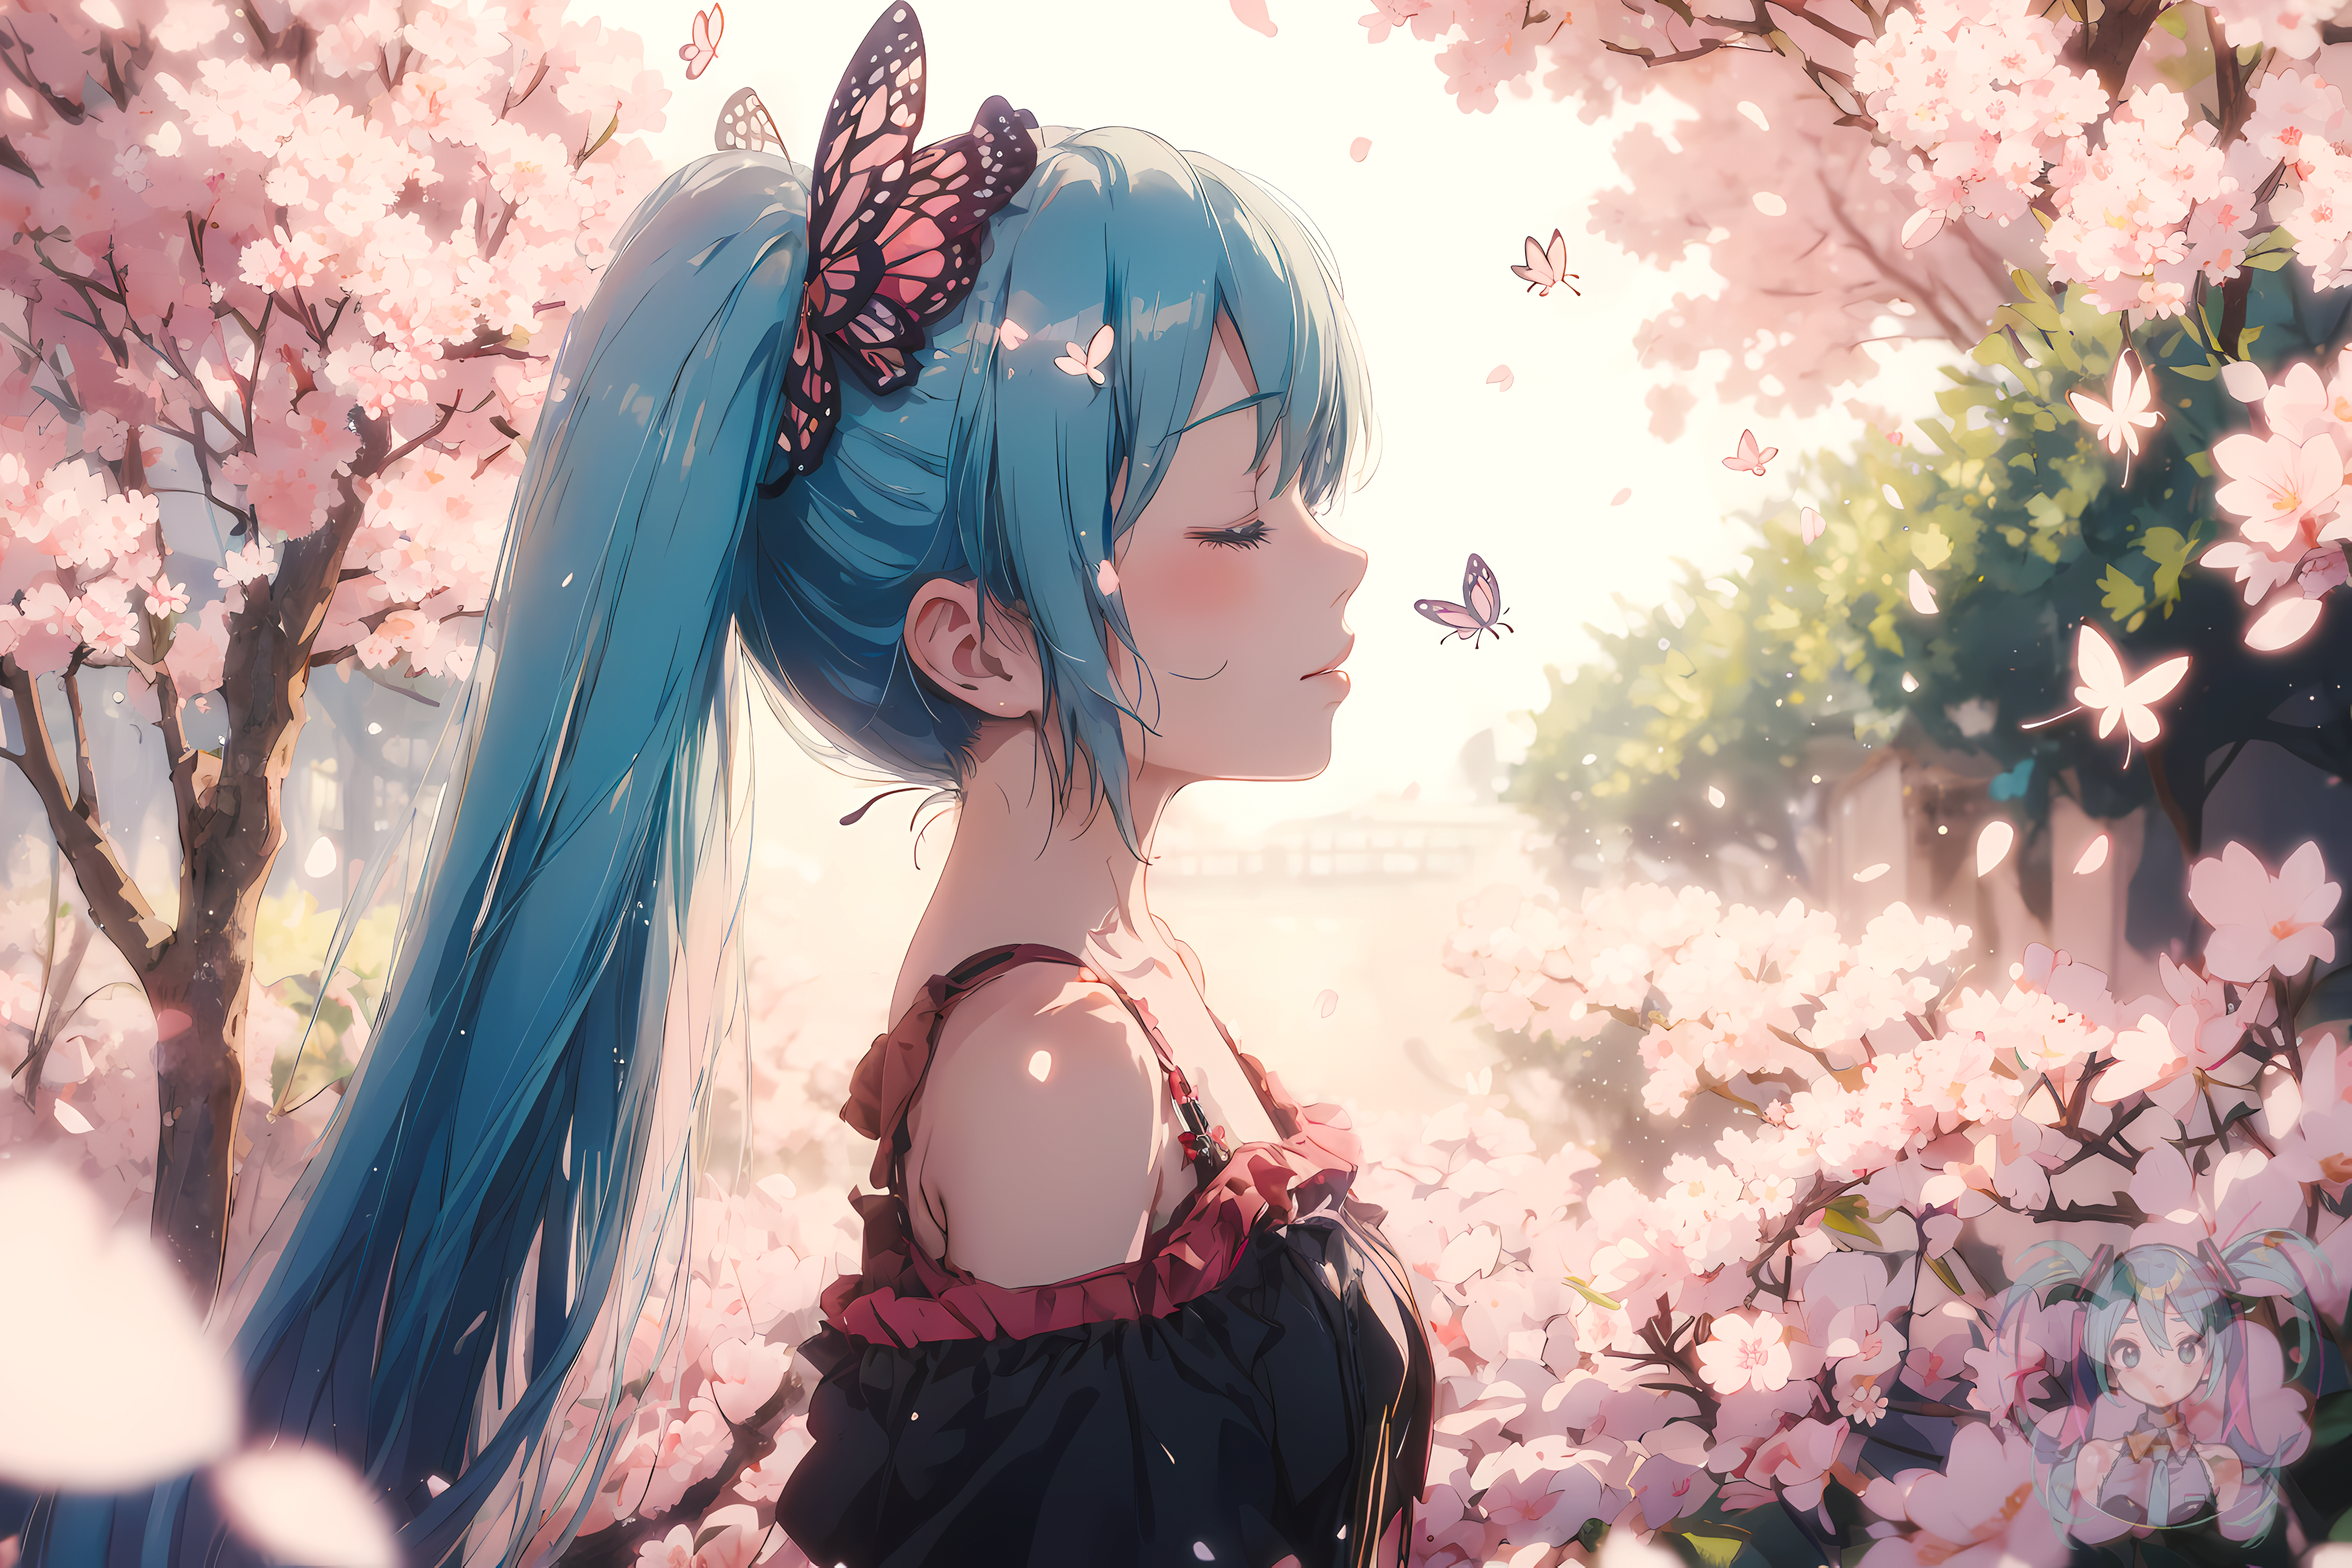 Anime 4096x2731 anime anime girls Vocaloid Hatsune Miku blue hair butterfly AI art profile flowers cherry blossom closed eyes long hair blushing hair ornament petals trees